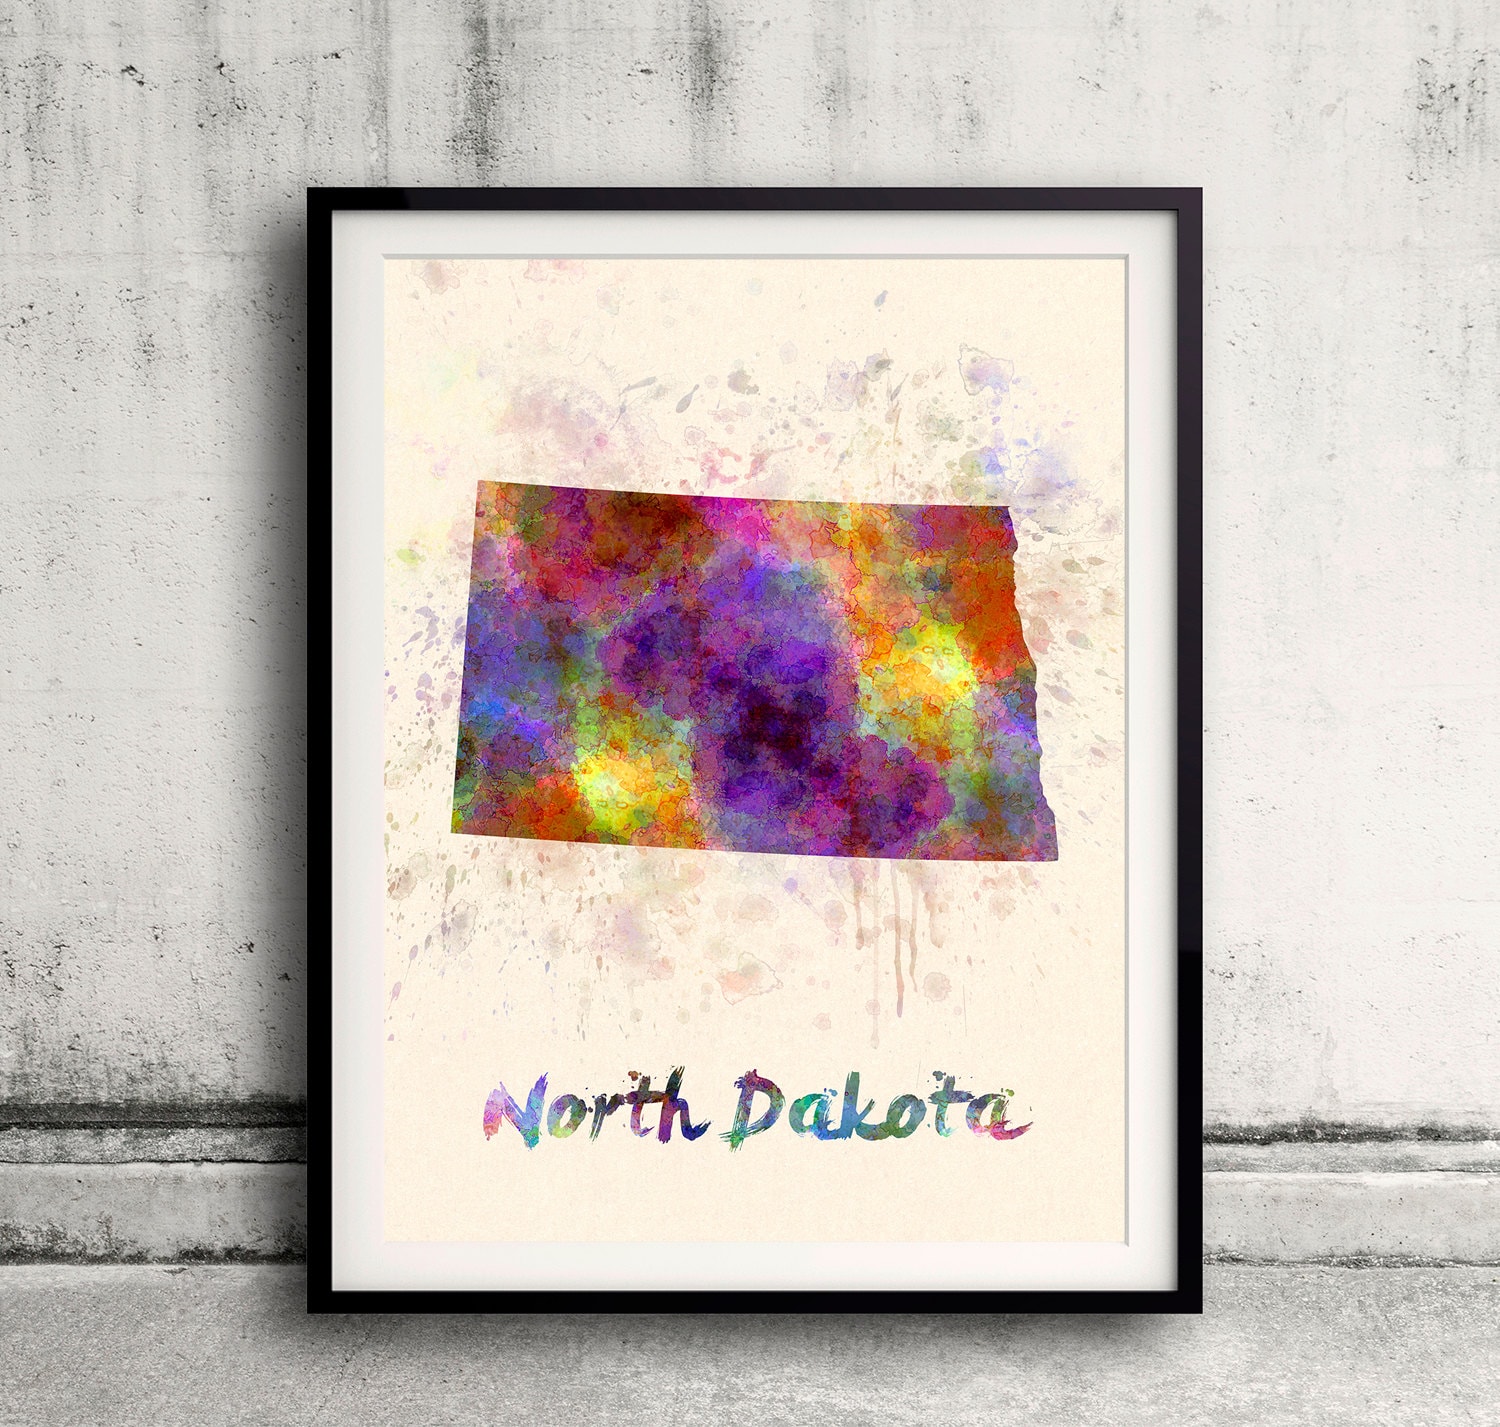 North Dakota Us State in Watercolor Background 8x10 In. To 12x16 Poster Digital Wall Art Illustration Print Art Decorative - Sku 0421